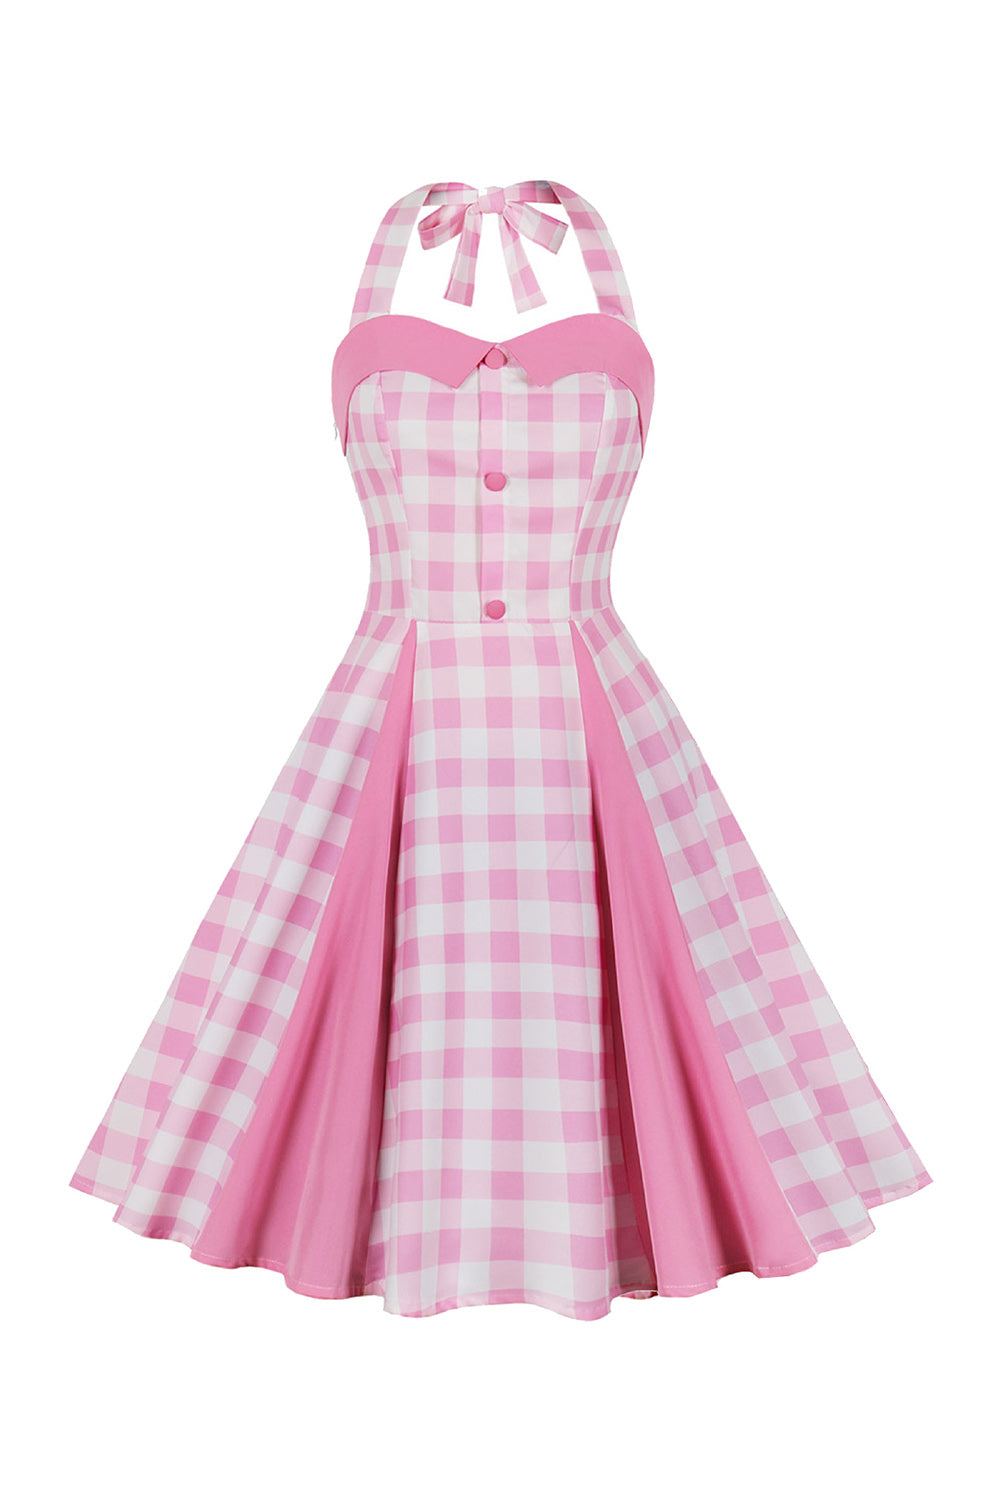 En linje Halter Neck Rosa rutete rosa kjole fra 1950-tallet